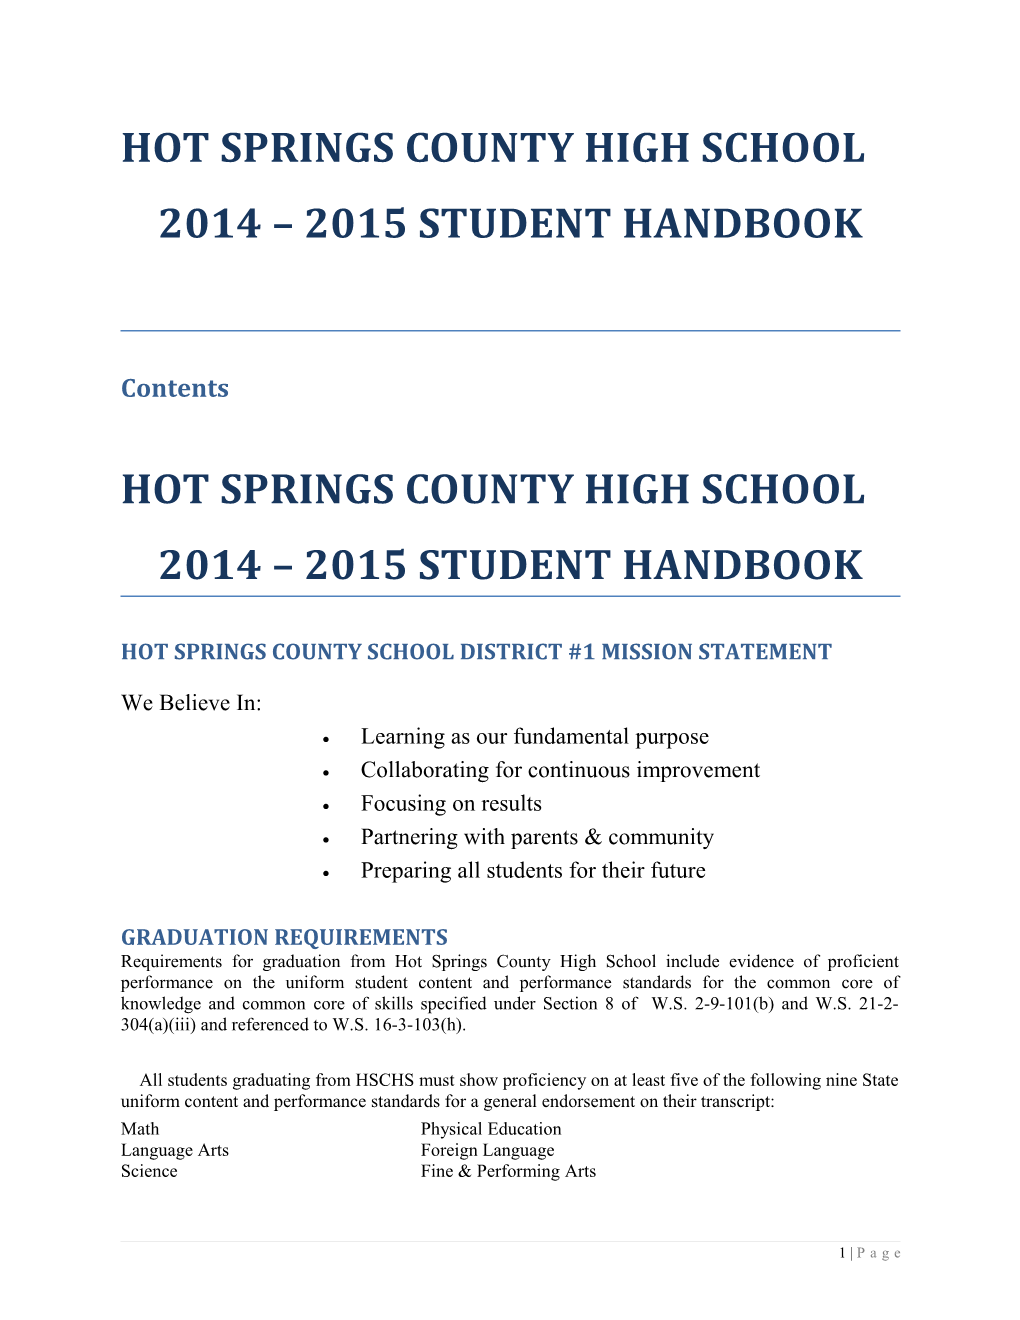 Hot Springs County High School